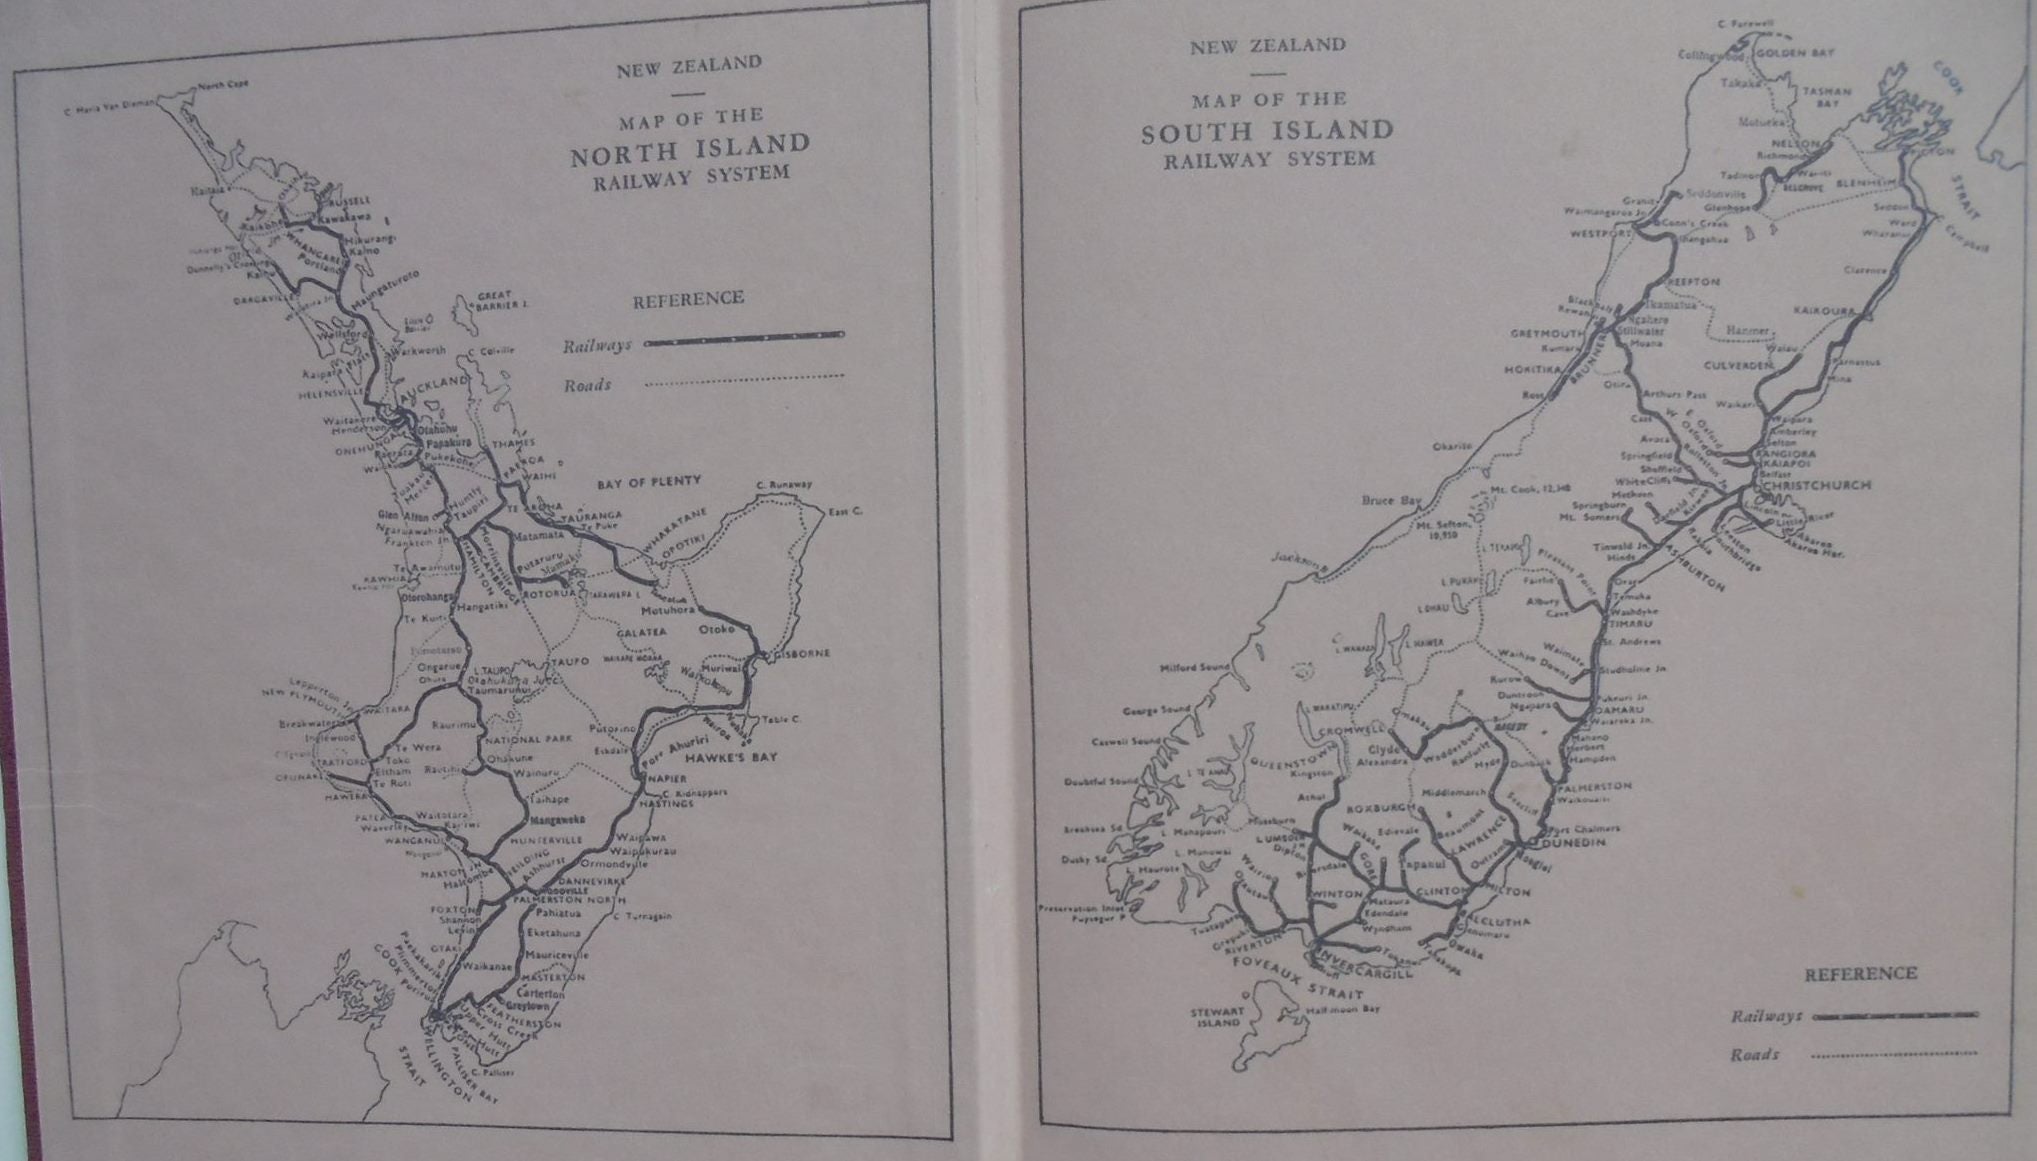 Engine Pass New Zealand Railways. By D. B. Leitch